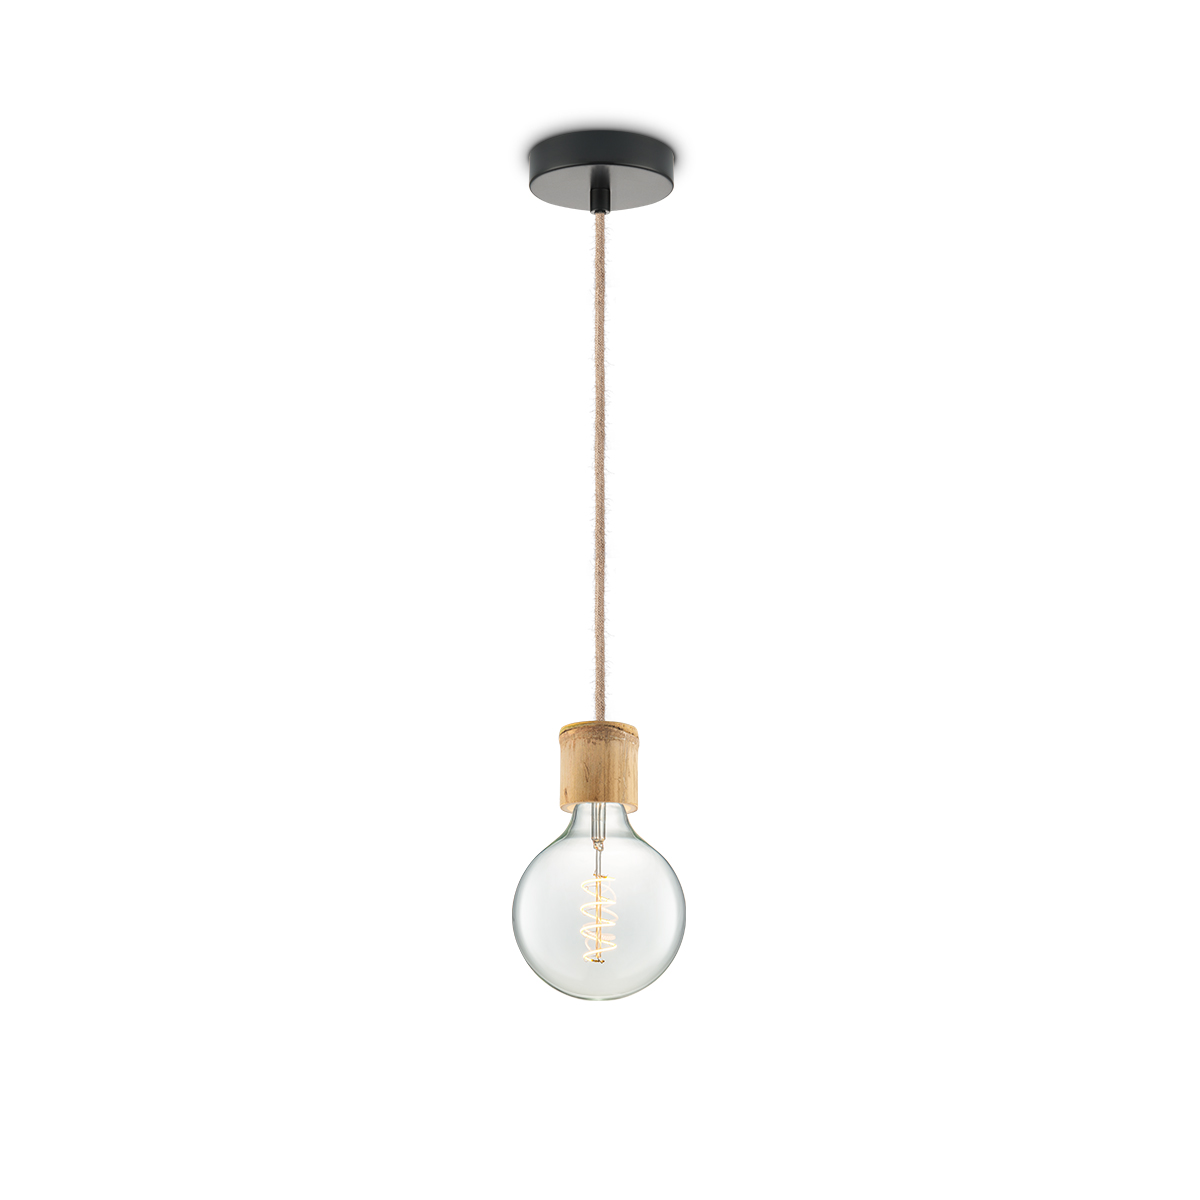 Tangla lighting - TLP7062-08NT - LED Pendant lamp 1 Light - metal + bamboo - natural - small bamboo - E27